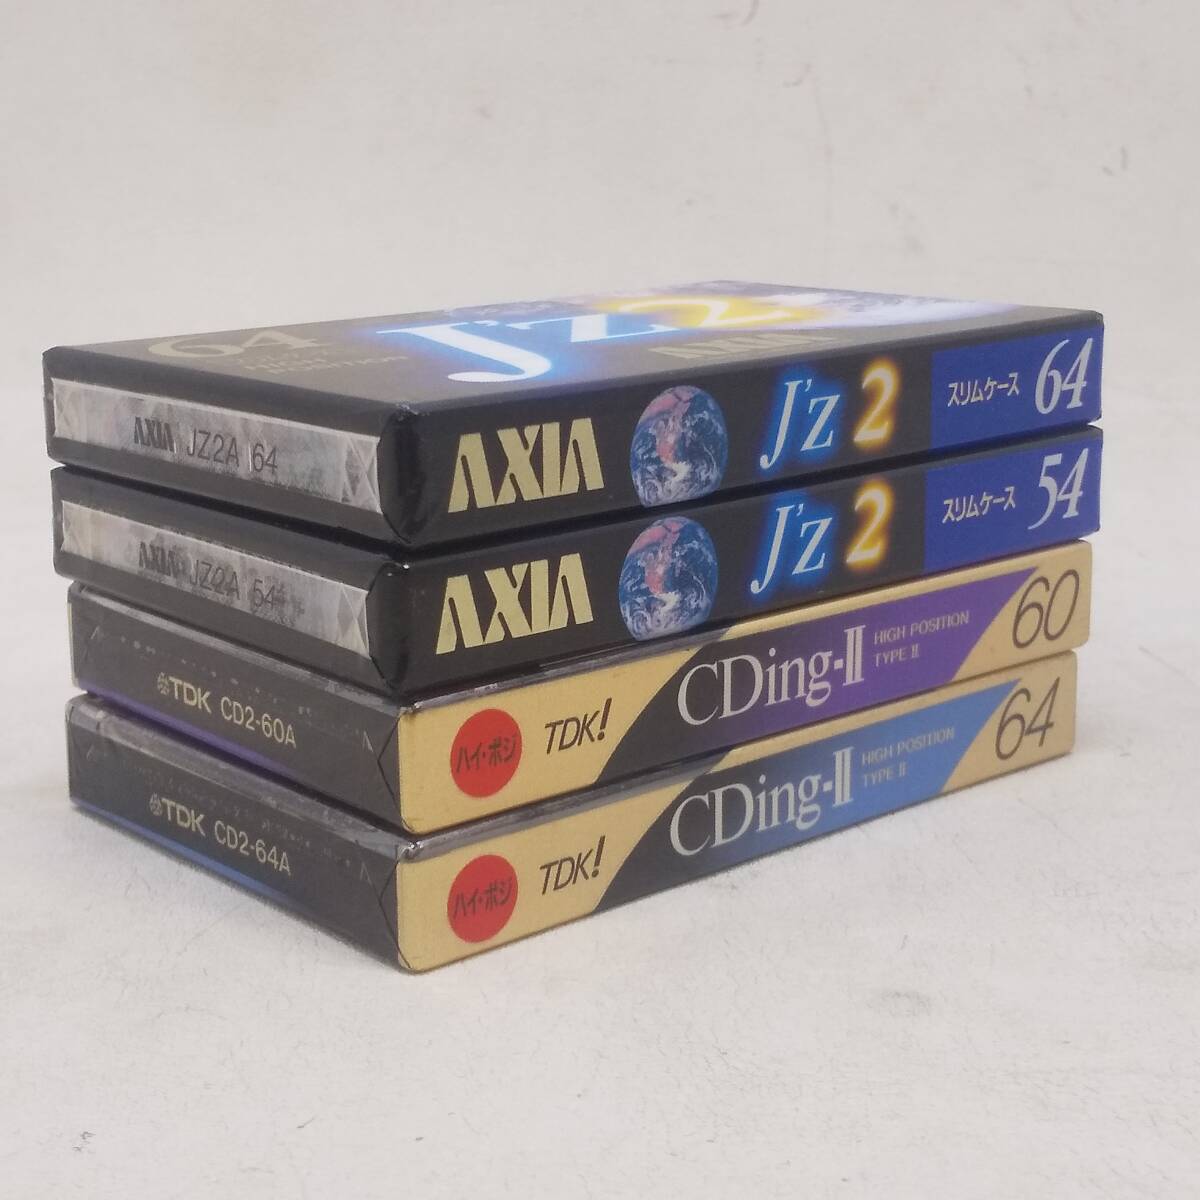 ◆TDK CDing-II 60/64 AXIA J'Z2 54/64 ハイポジ カセットテープ 4本セット 未開封品 送料185円◆G2348_画像10